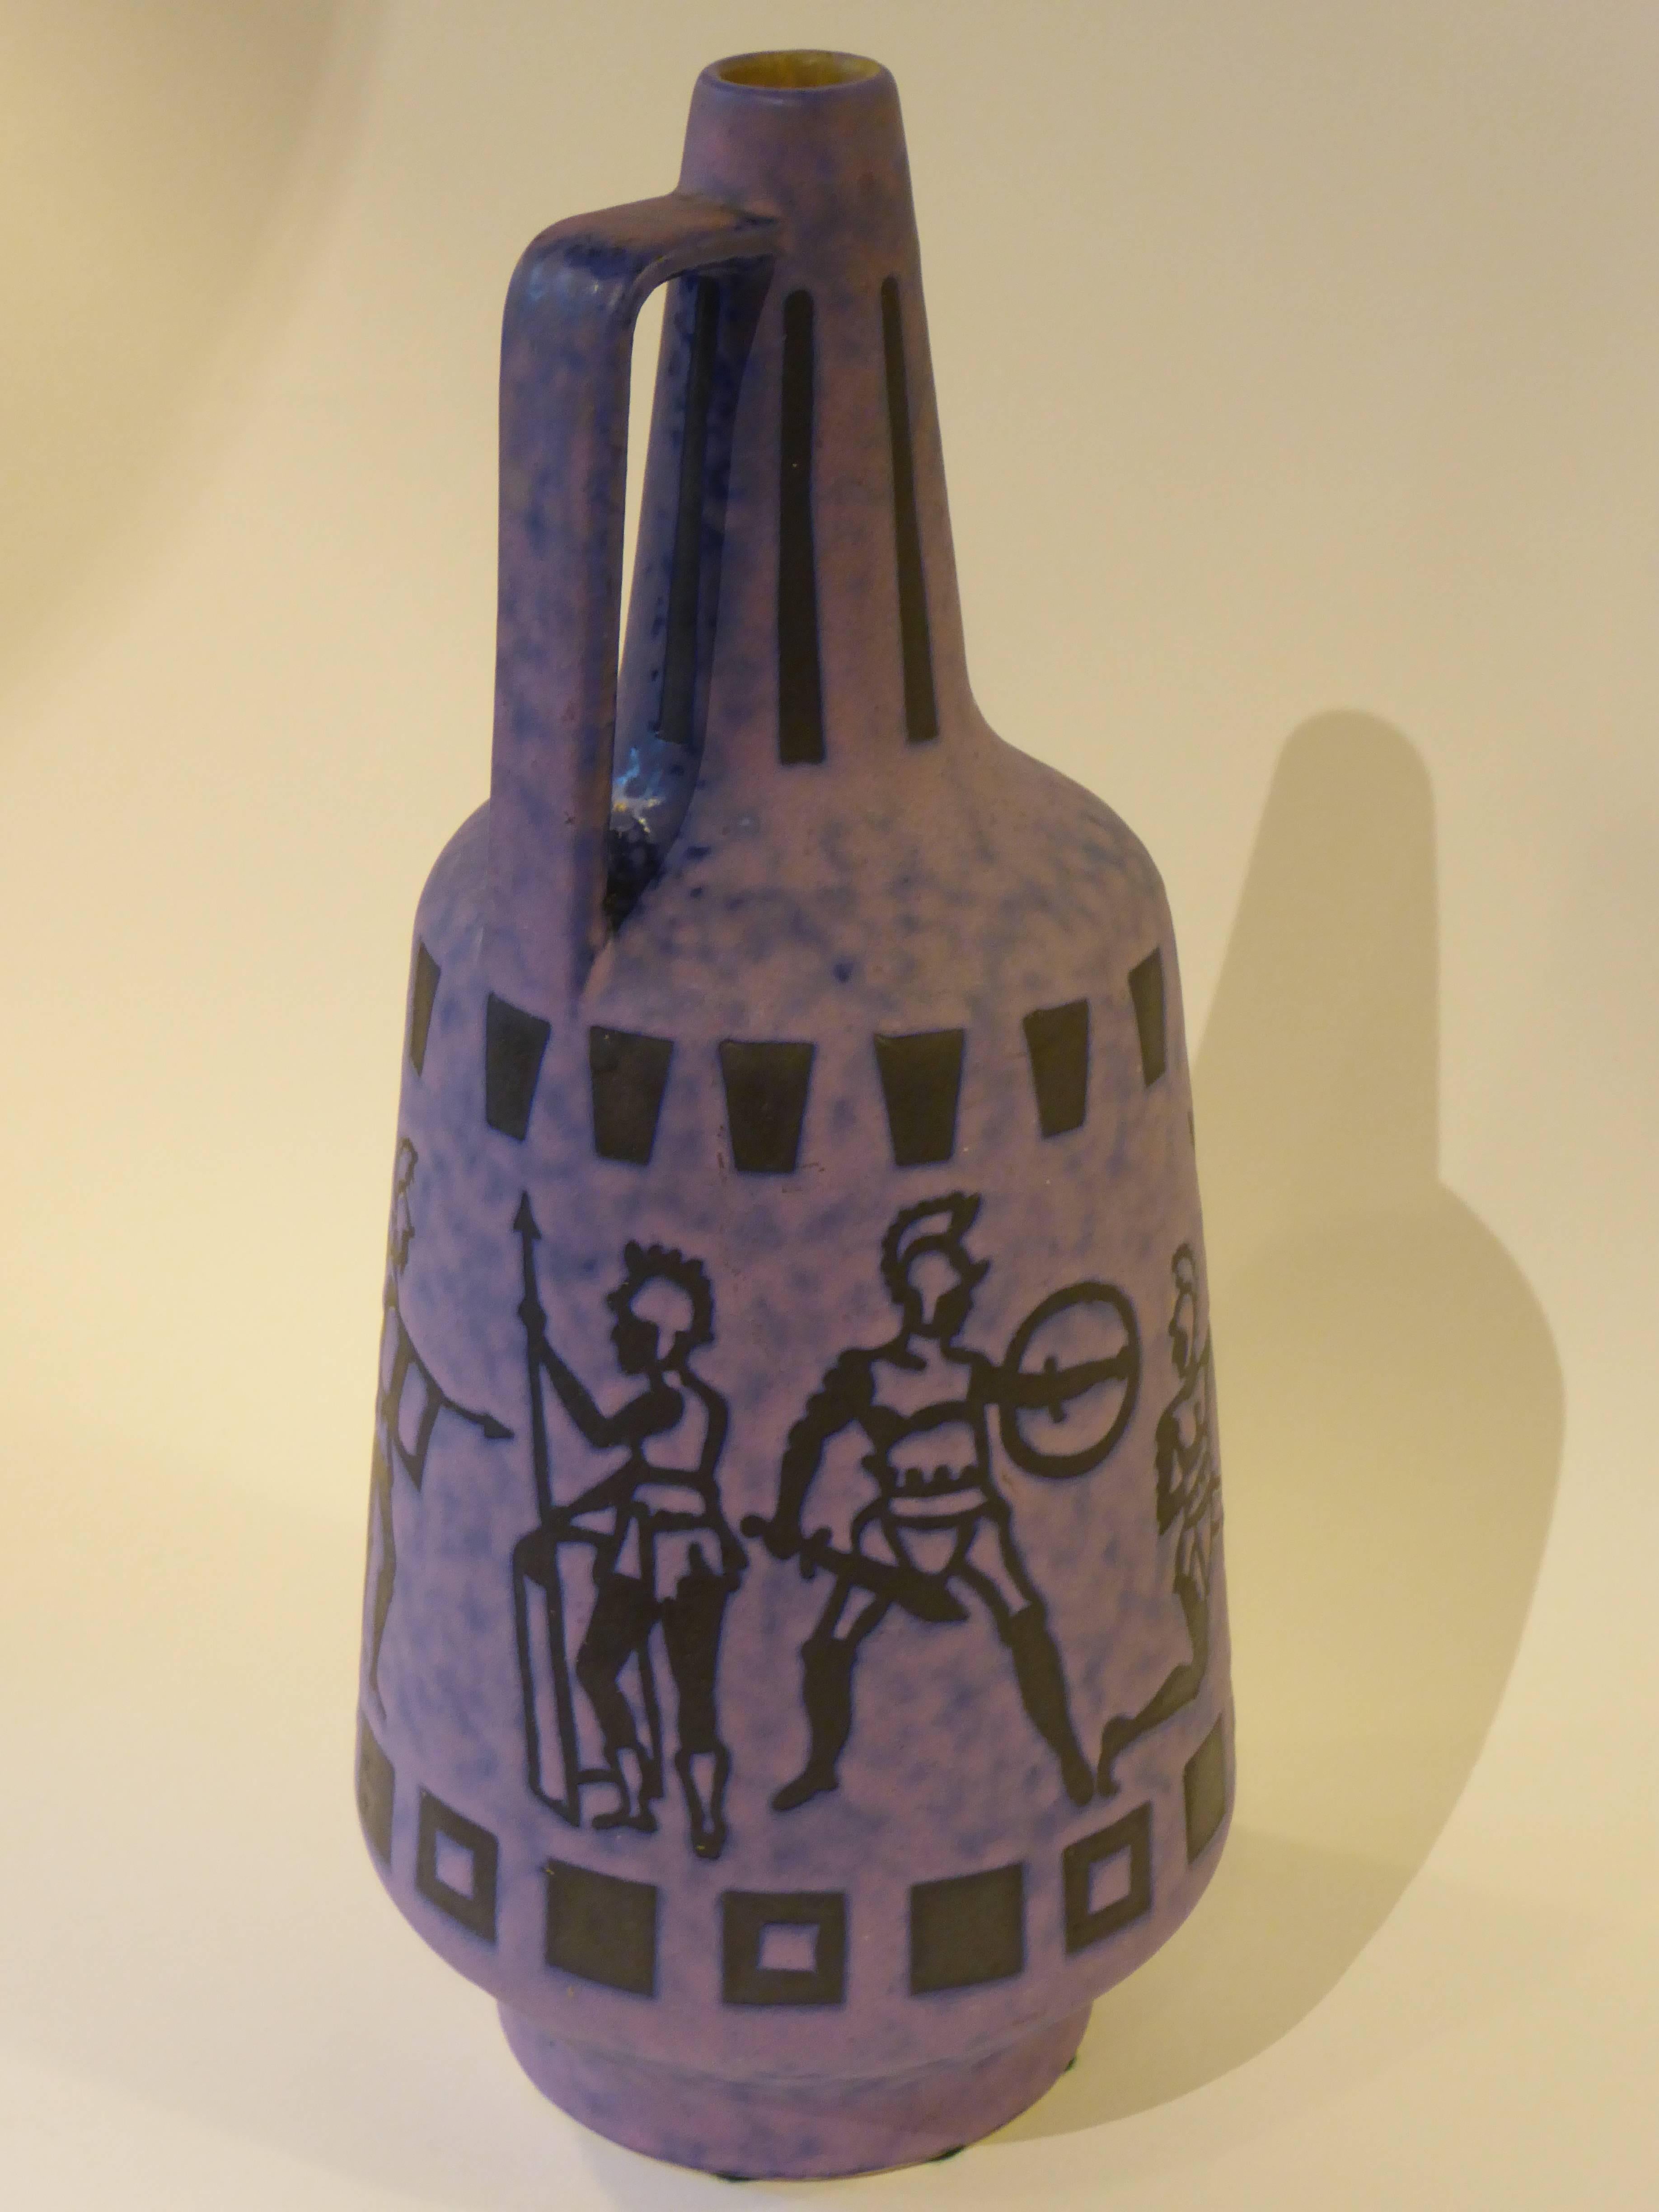 Clay Tall 1960s Jopeko Keramik Vase Ewer Germany Mid-Century Modern